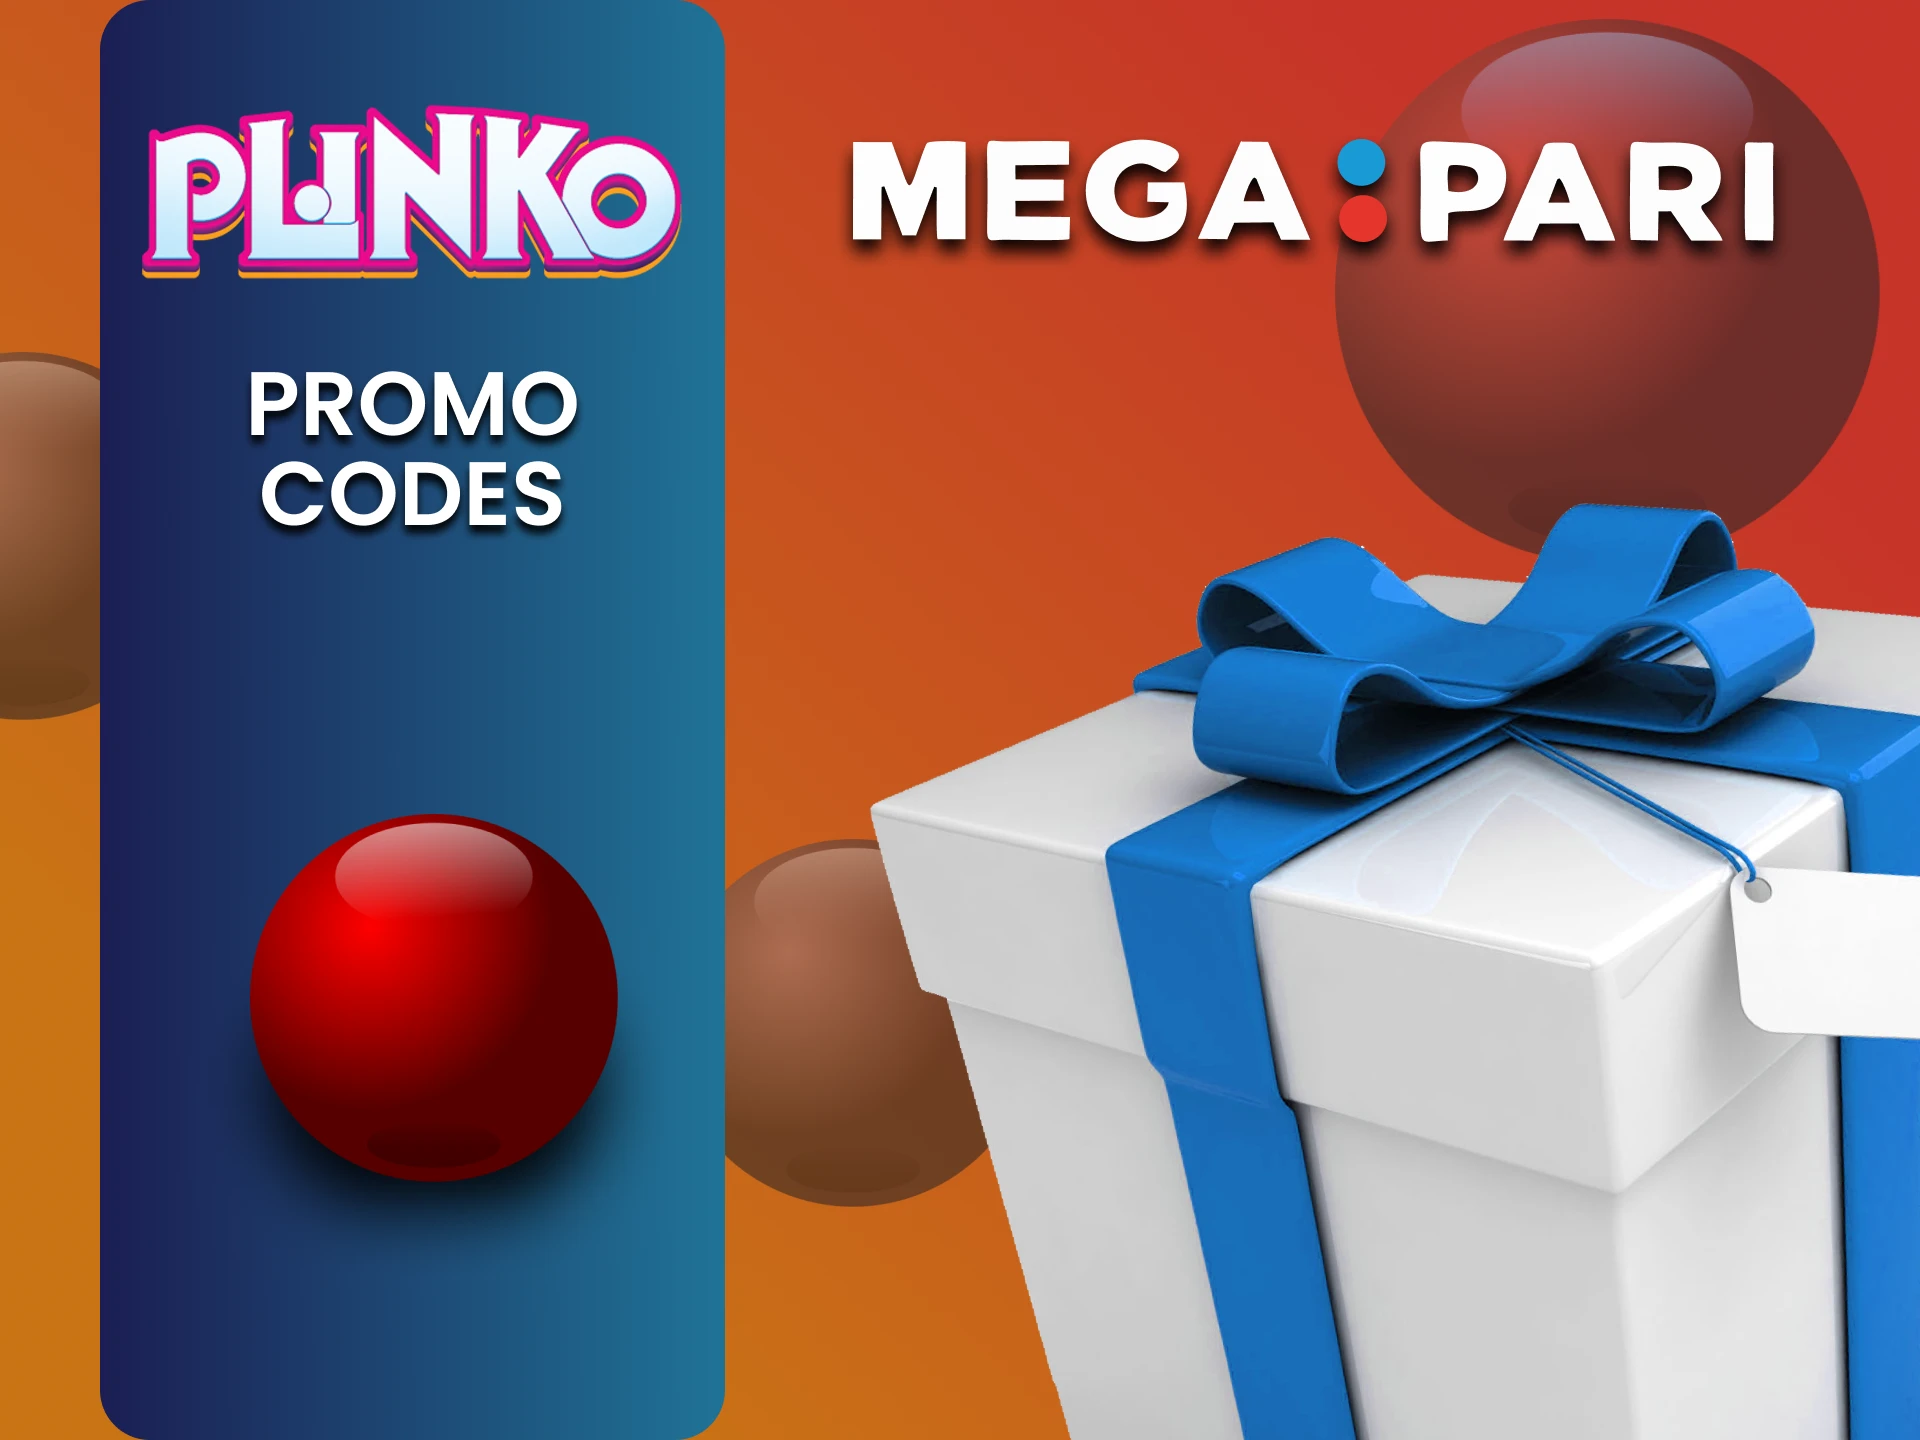 Use a bonus promo code for playing Plinko at Megapari.